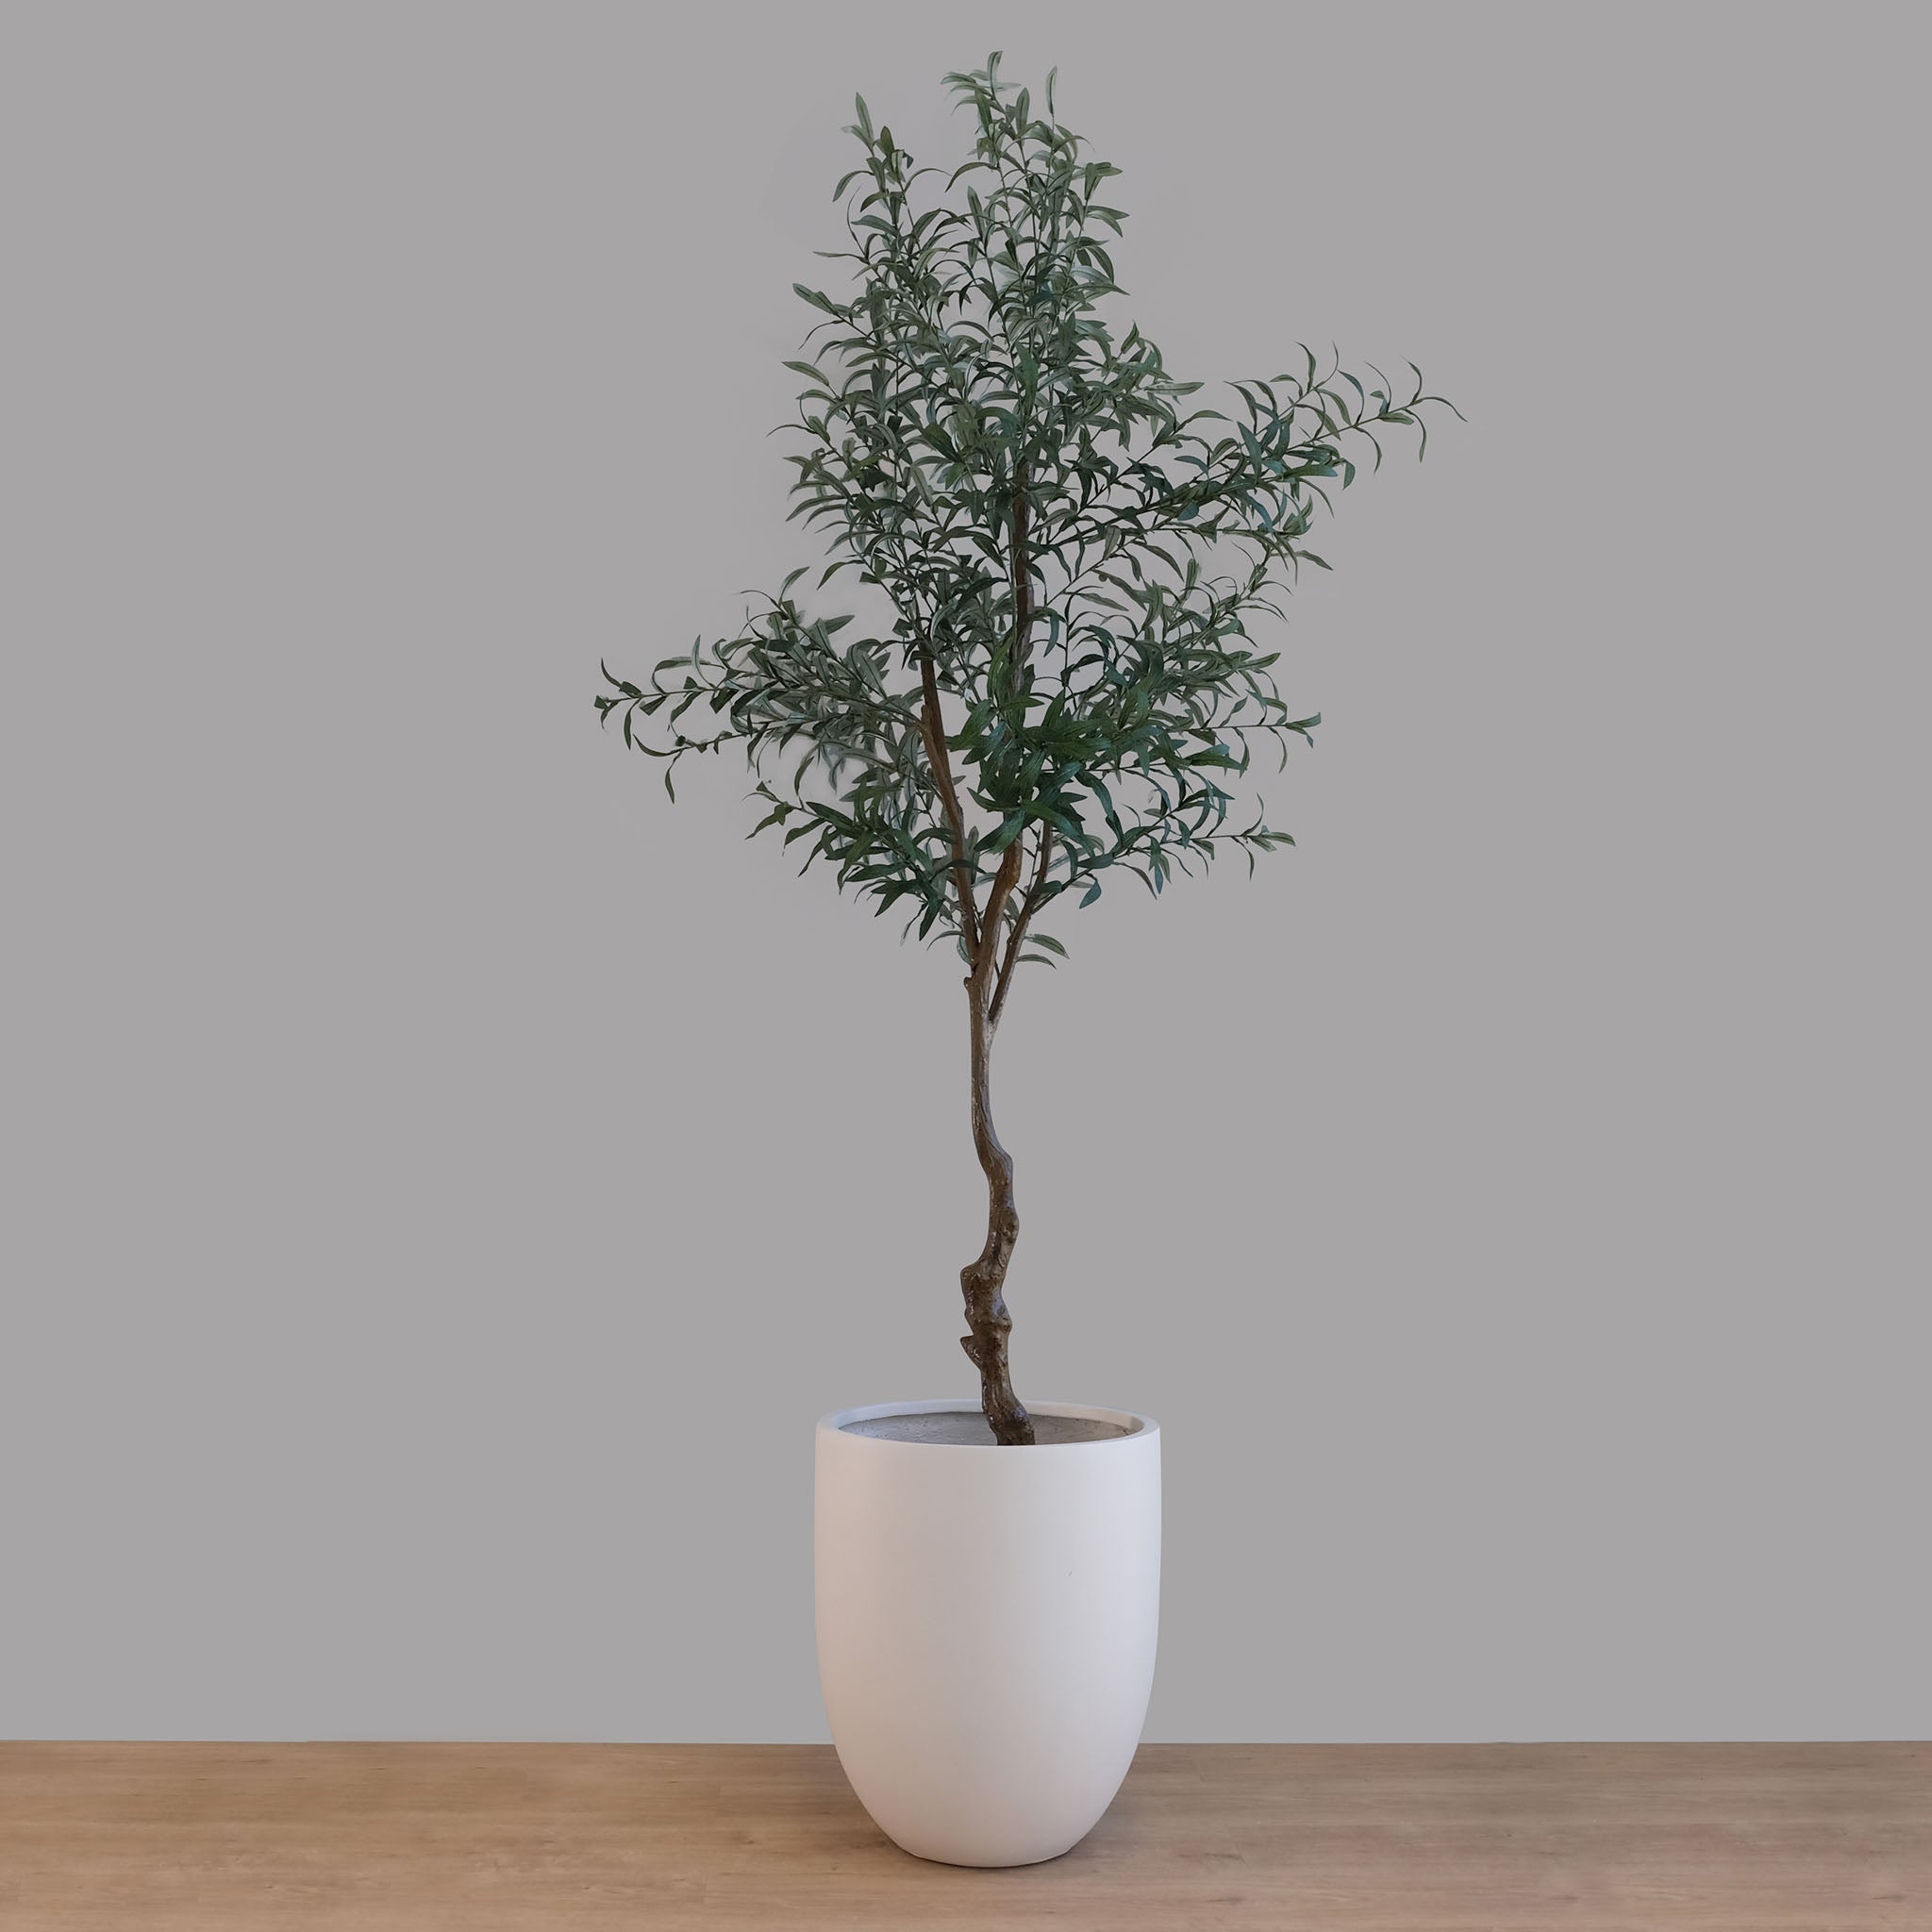 Clay Salma planter with olive tree